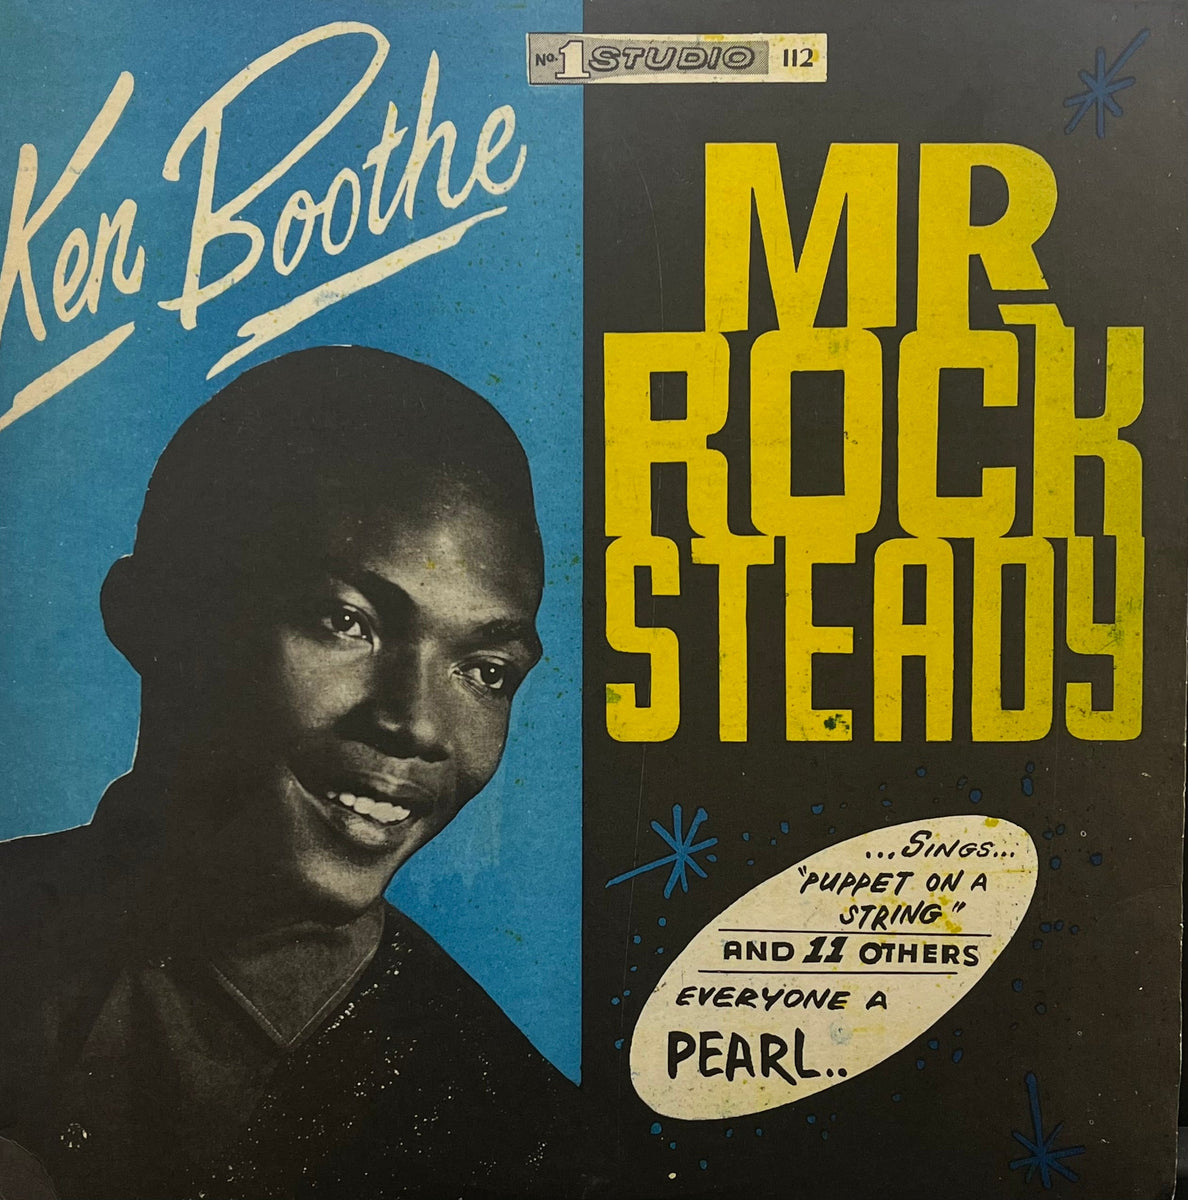 KEN BOOTHE / Mr Rock Steady (Studio One – 112